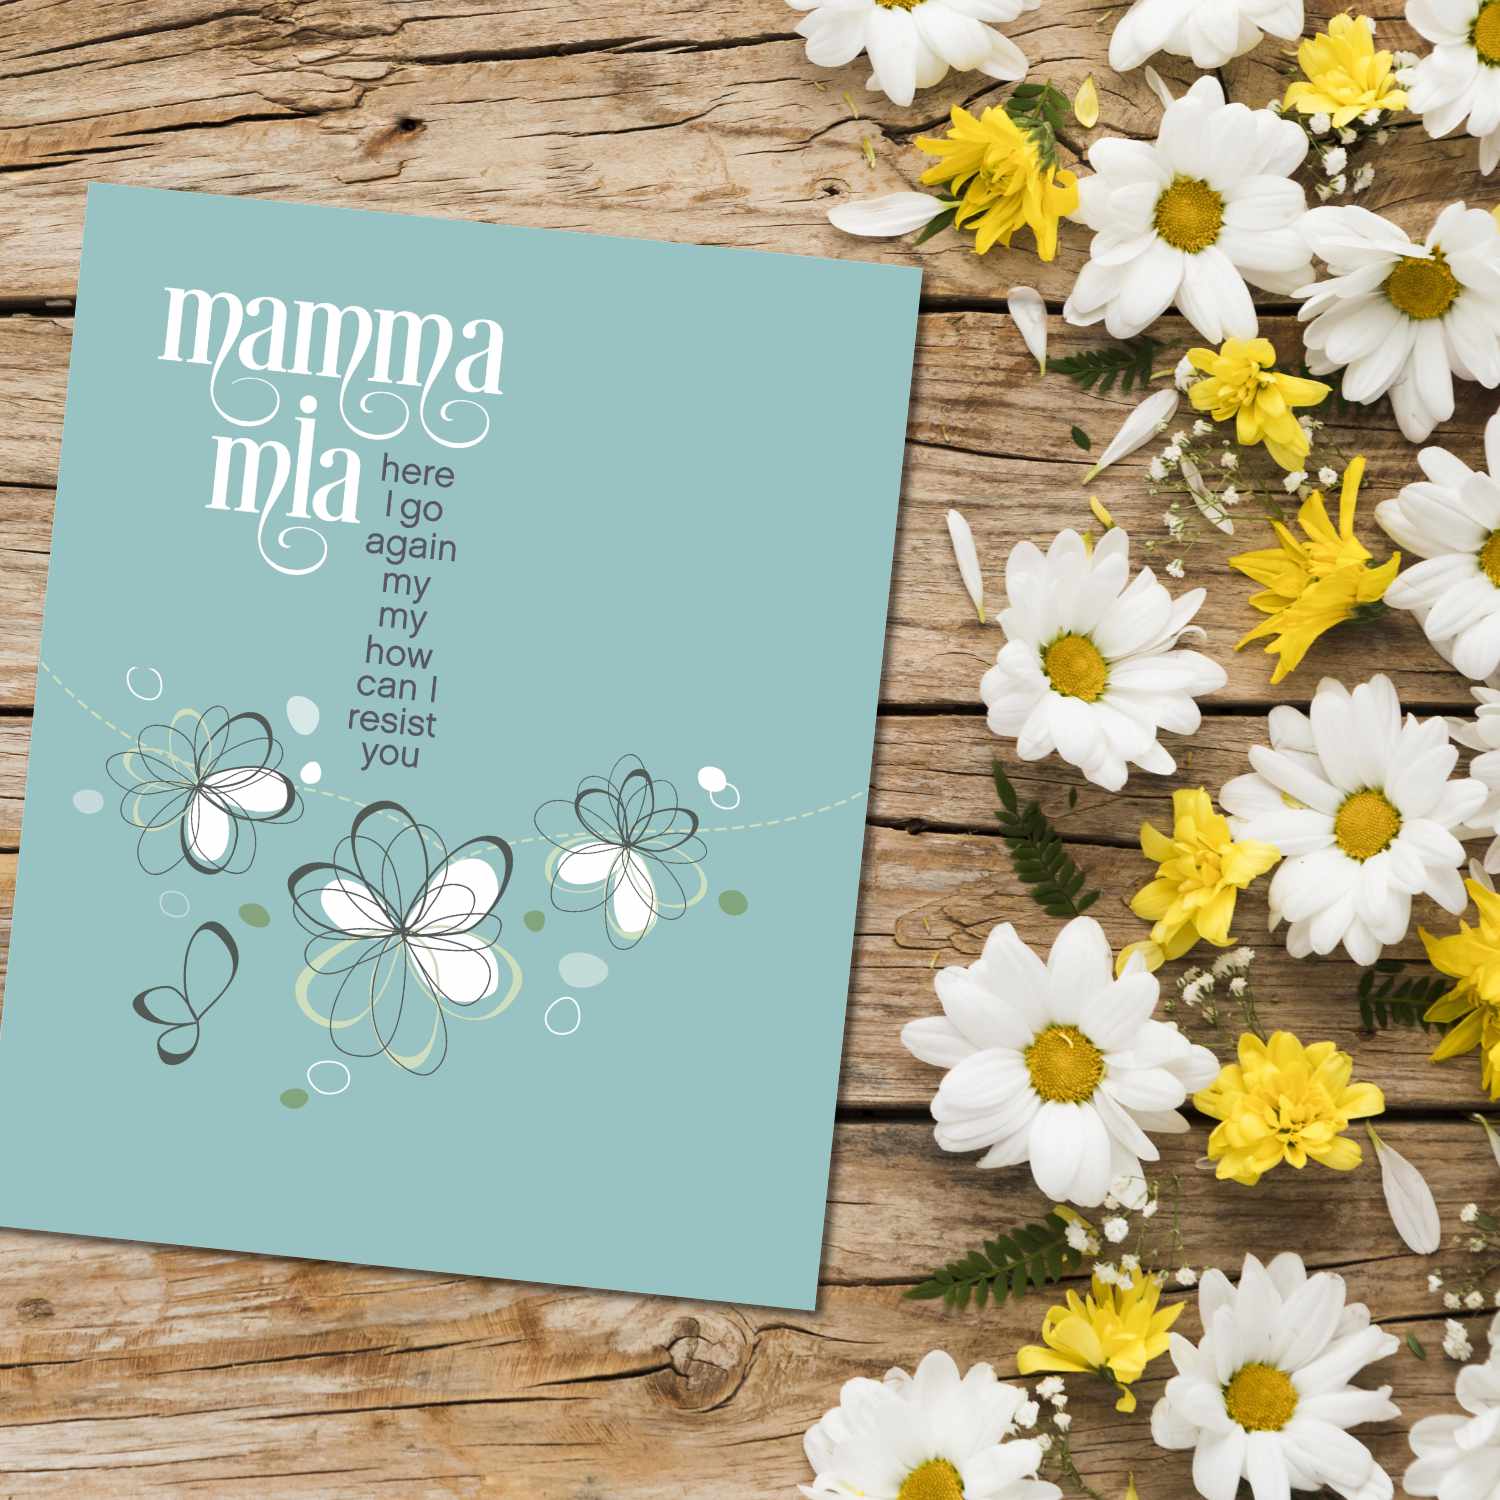 Mamma Mia by ABBA - Song Lyric Pop Music Wall Art Print Song Lyrics Art Song Lyrics Art 8x10 Unframed Print 